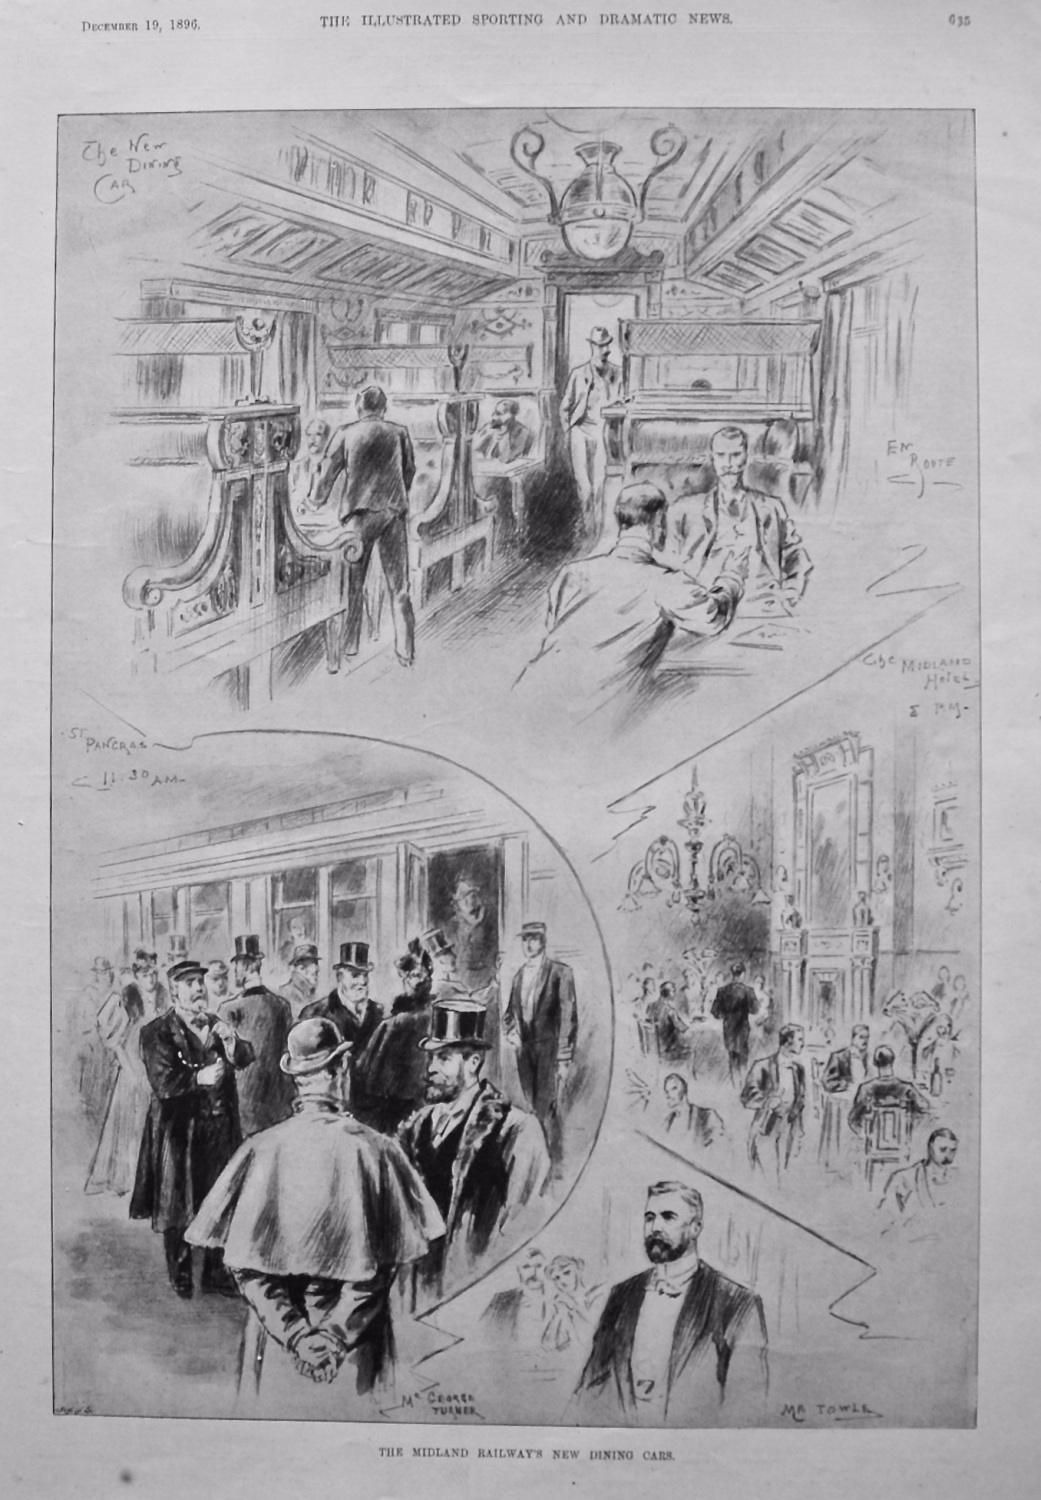 The Midland Railway's New Dining Cars. 1896.